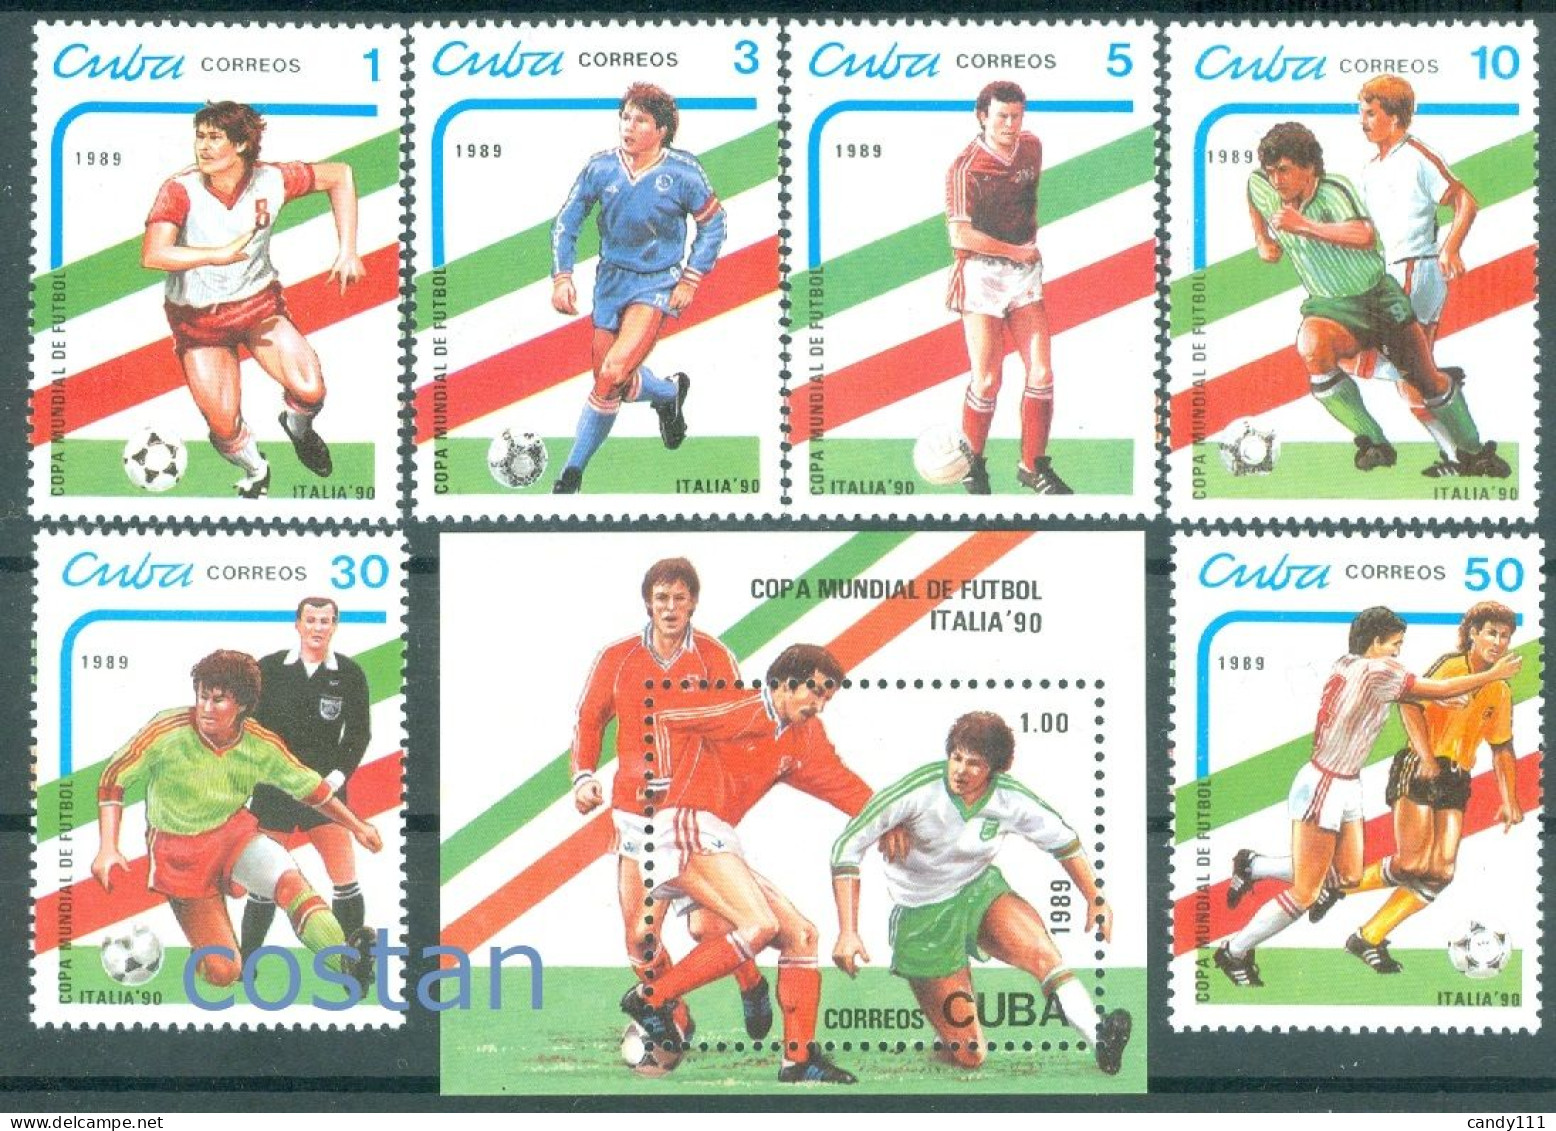 1989 Football/soccer World Championships Italy/ITALIA'90,cuba,3271,114,MNH - 1990 – Italien